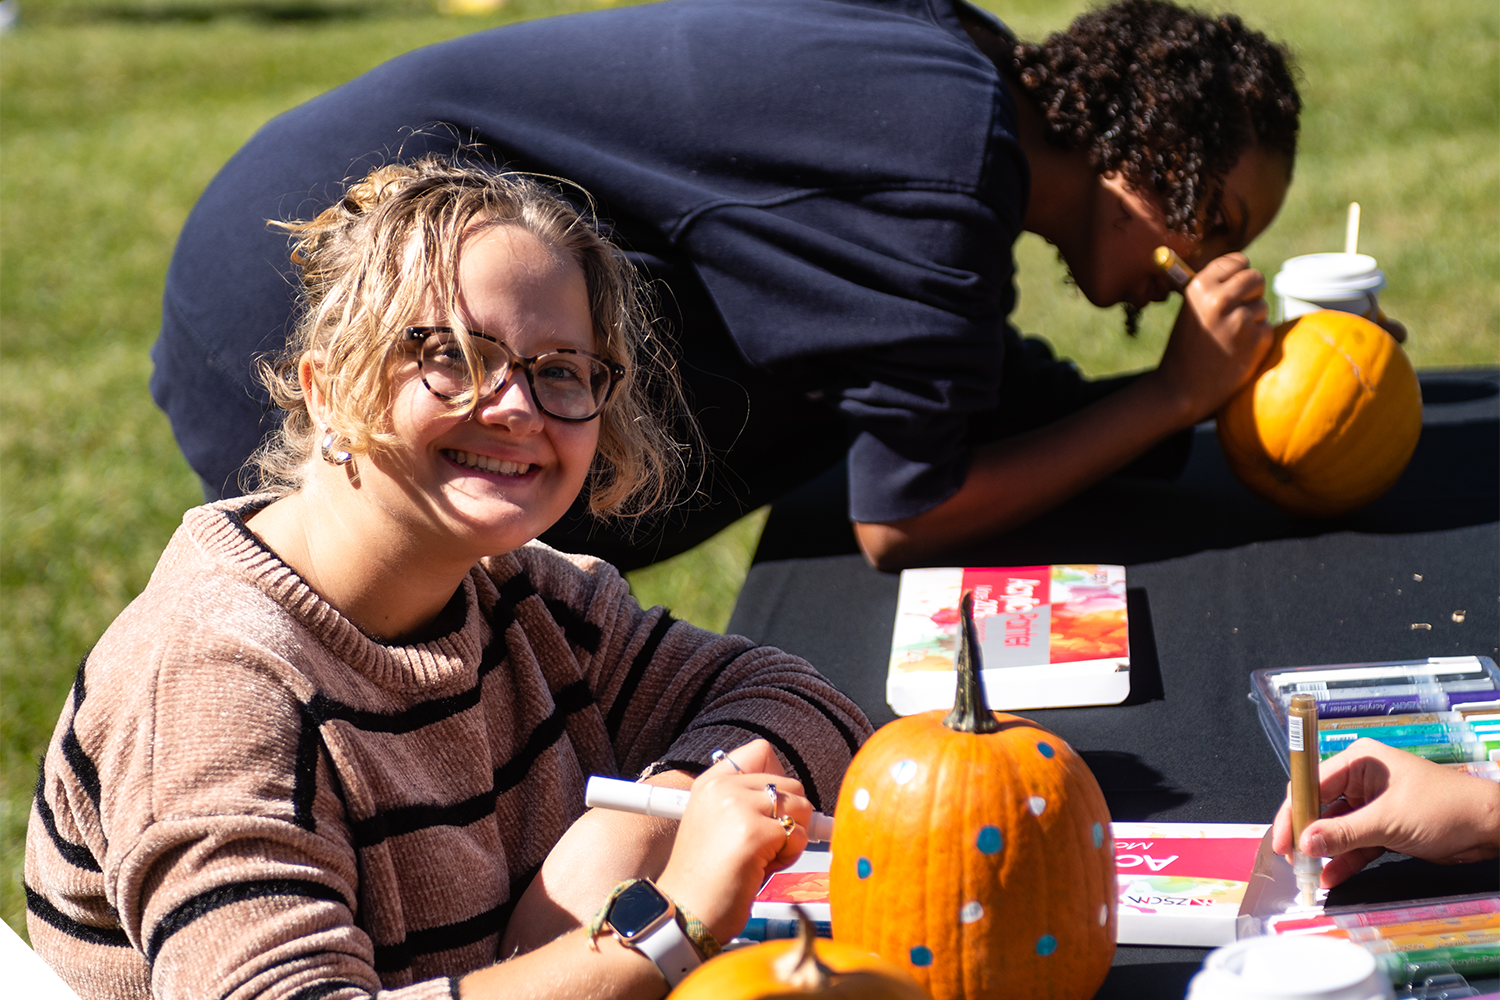 A Marietta College Student decorates a pumpkin during a Student Life Event